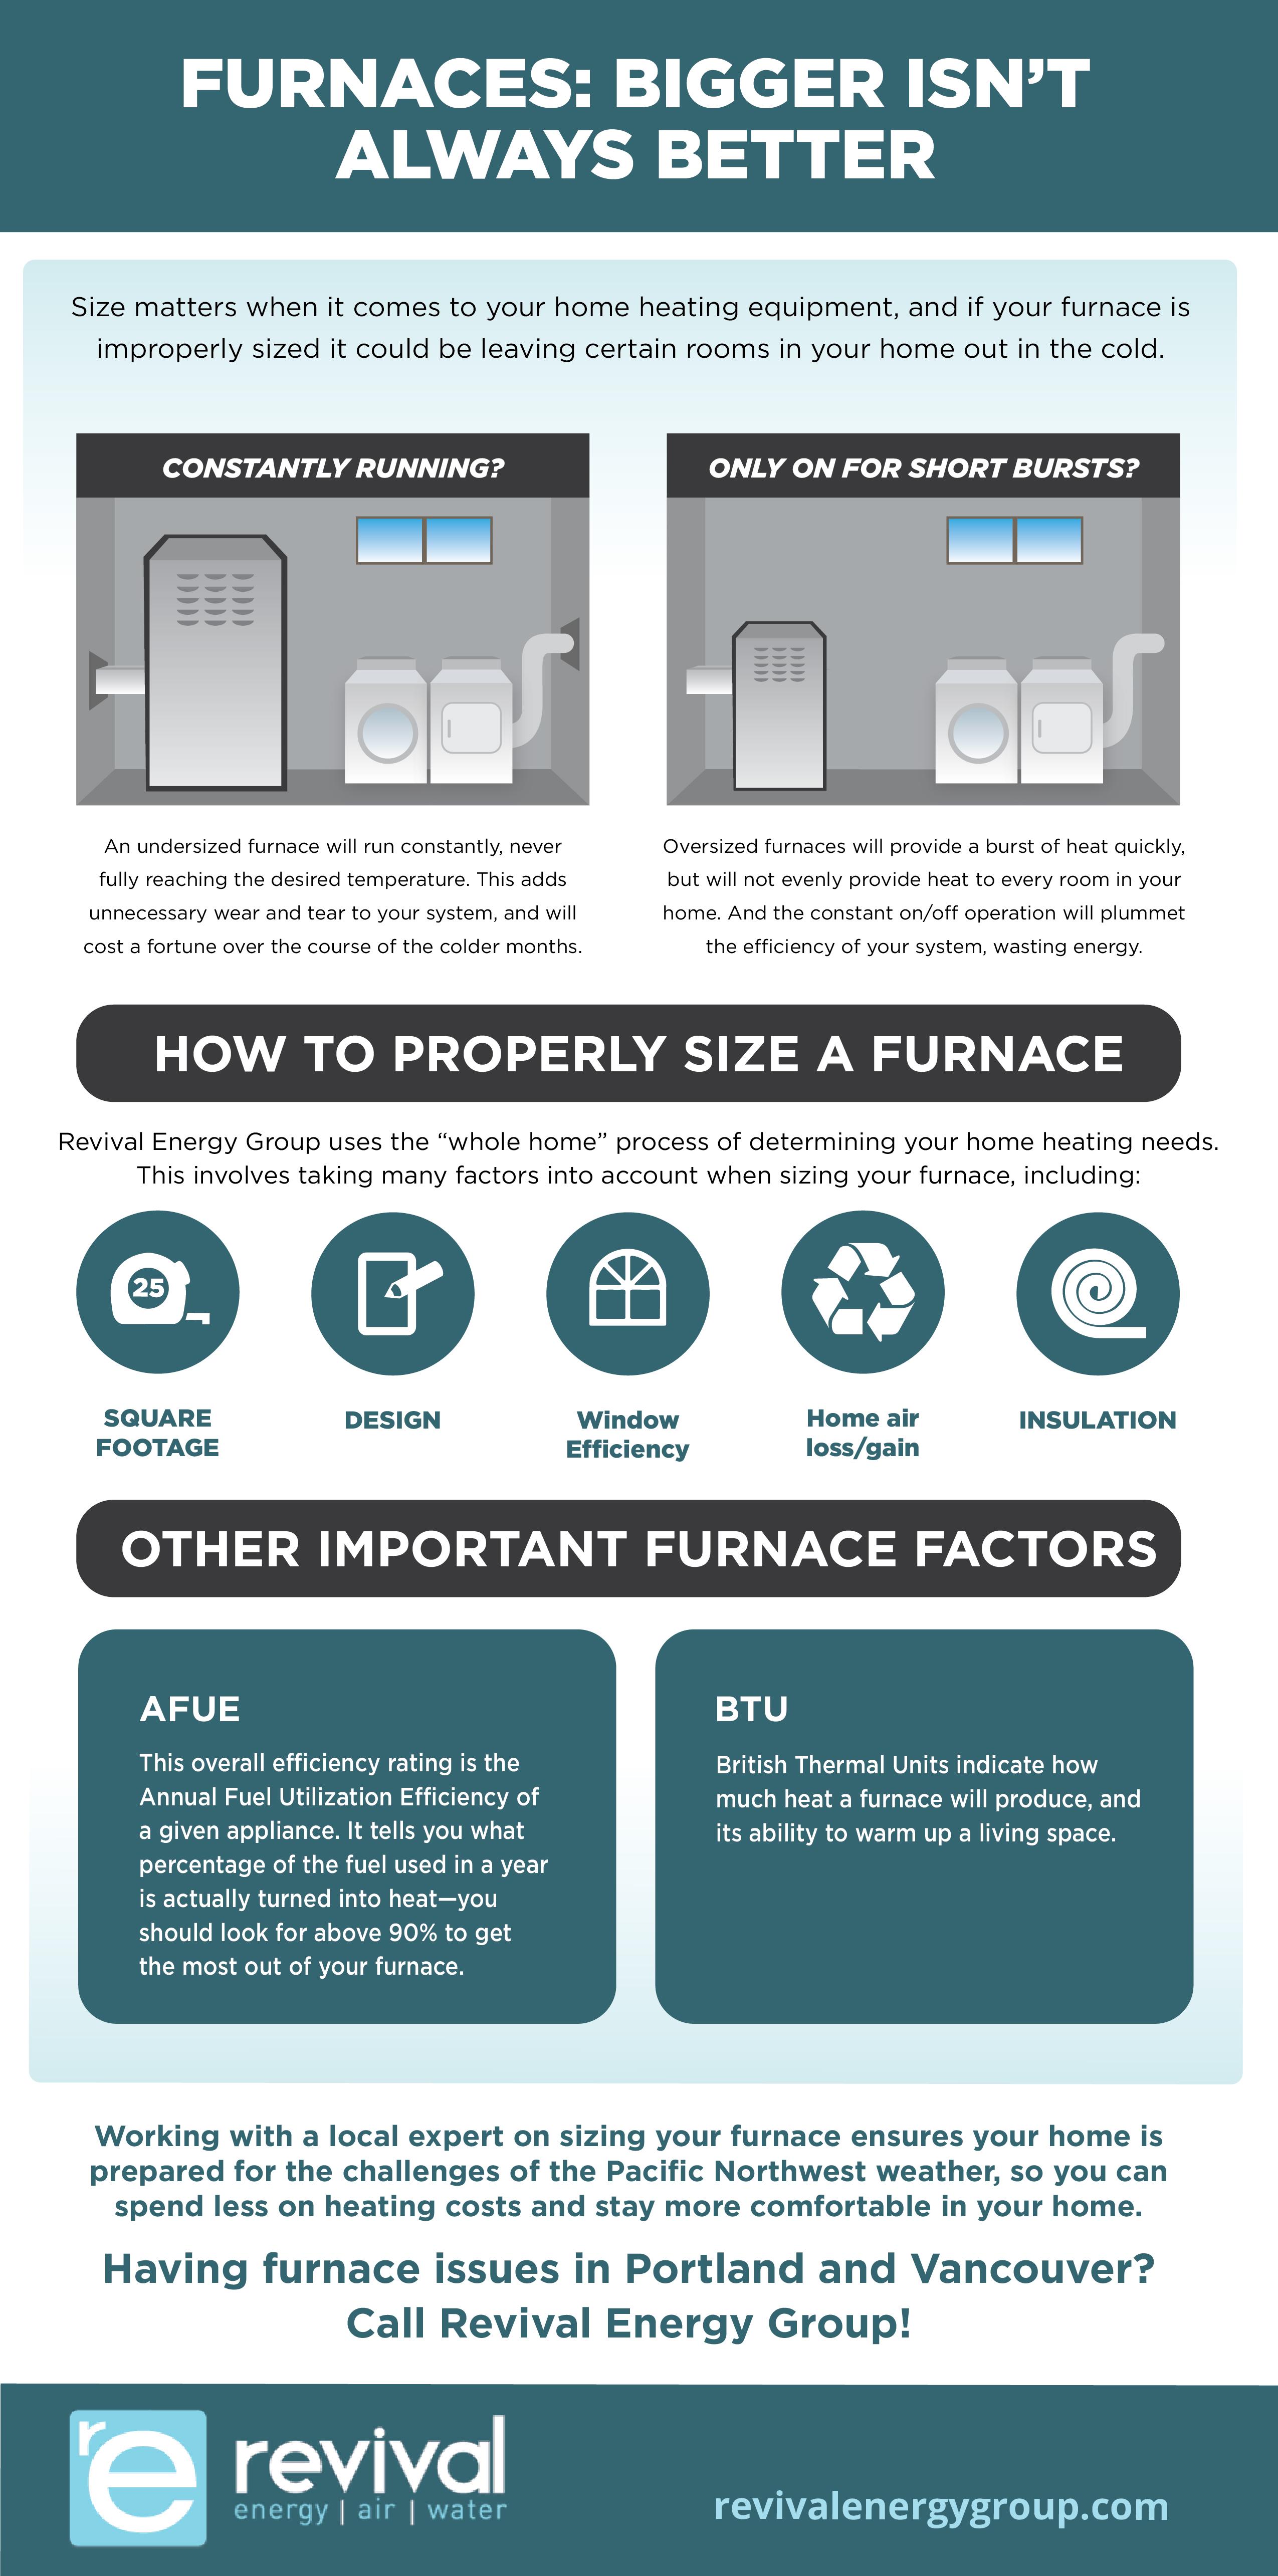 furnaces: bigger isn't always better